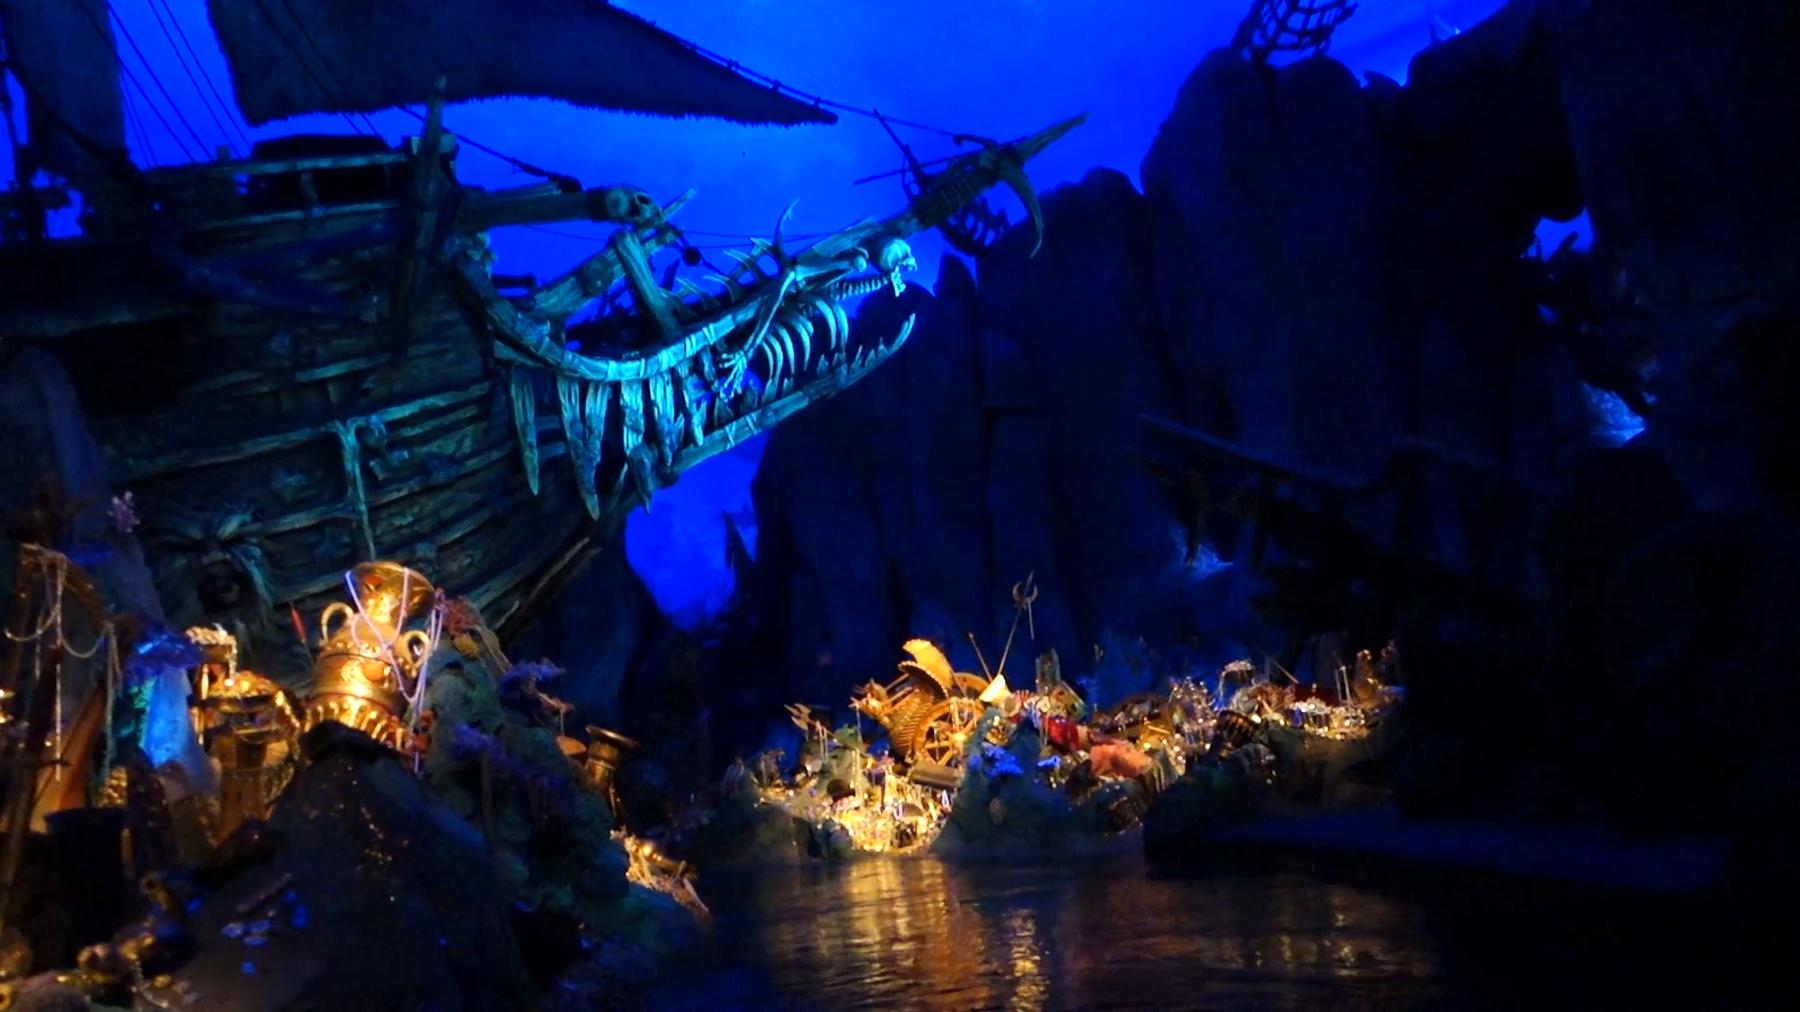 Pirates of the Caribbean Complete Ride POV Shanghai Disneyland (HD) 